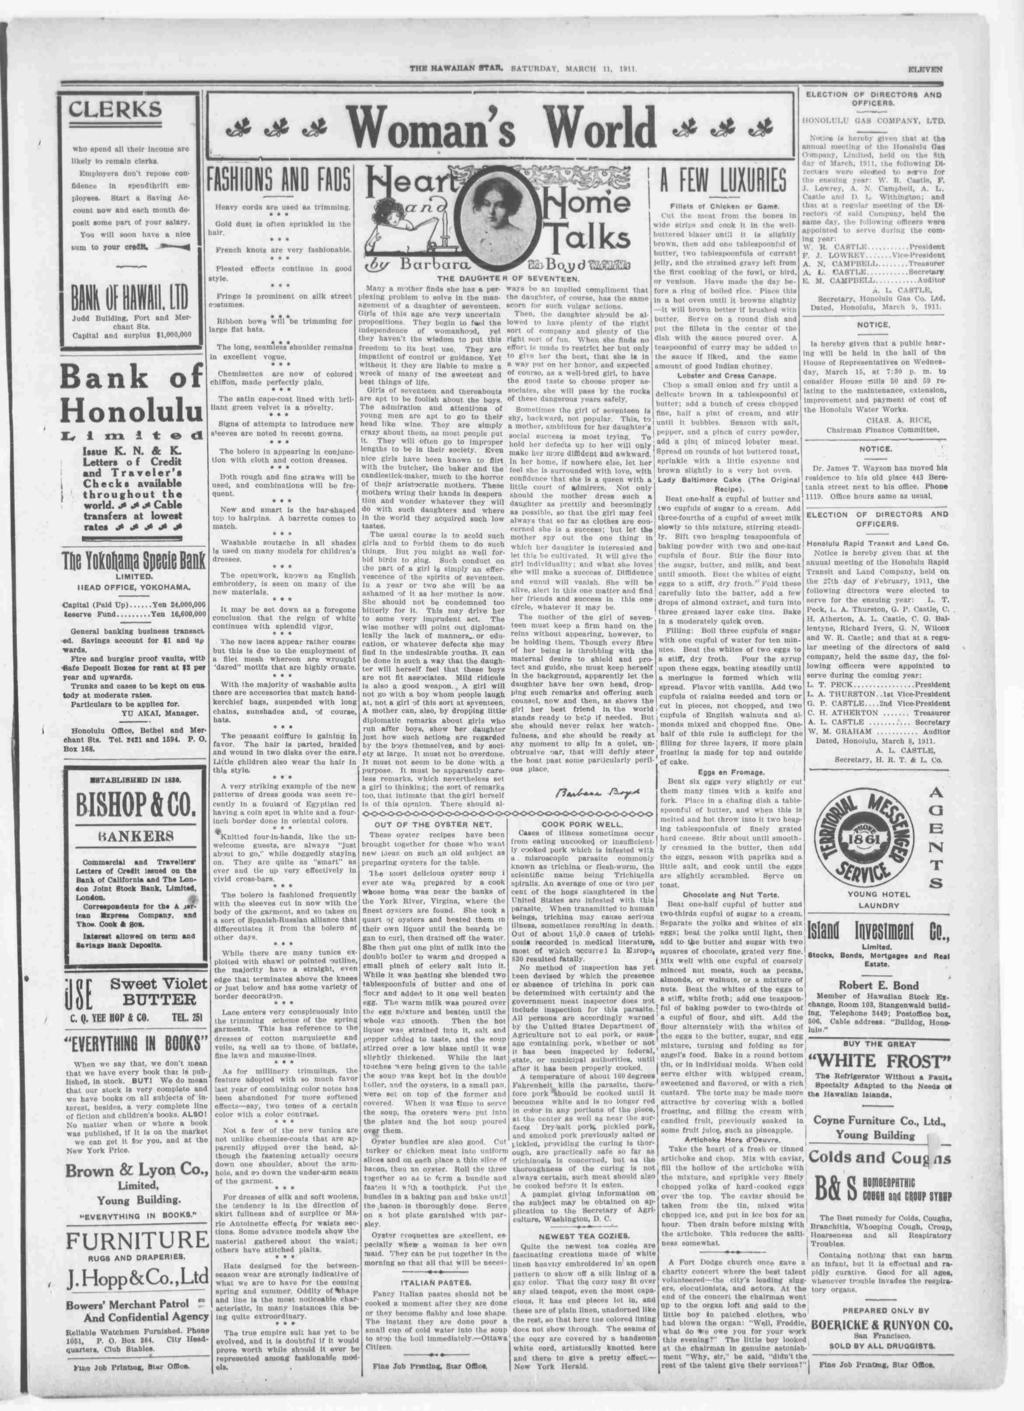 TUB HAWAAN STAR, SATURDAY, MARCH 11, 1911. ELEVEN CLERKS w ELECTON OF DRECTORS AND OFFCERS. ft S HONOLULU OAS COMPANY, LTD.